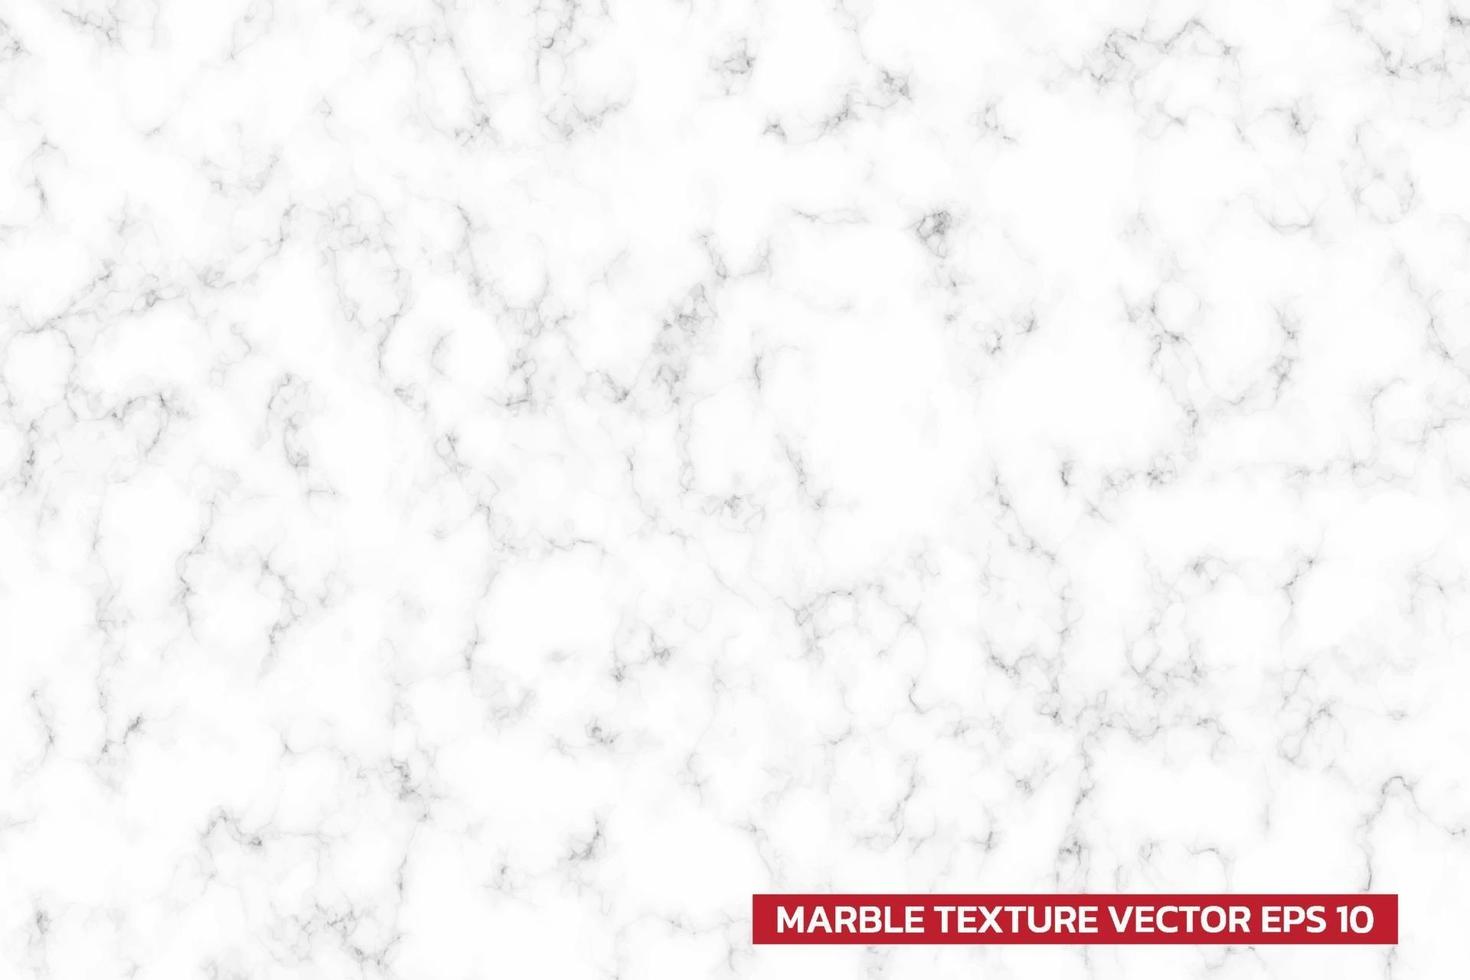 fondo de textura de mármol blanco textura de mármol abstracta para diseño de moda carteles pancartas o tarjetas decoración del hogar piso de piedra blanca vector